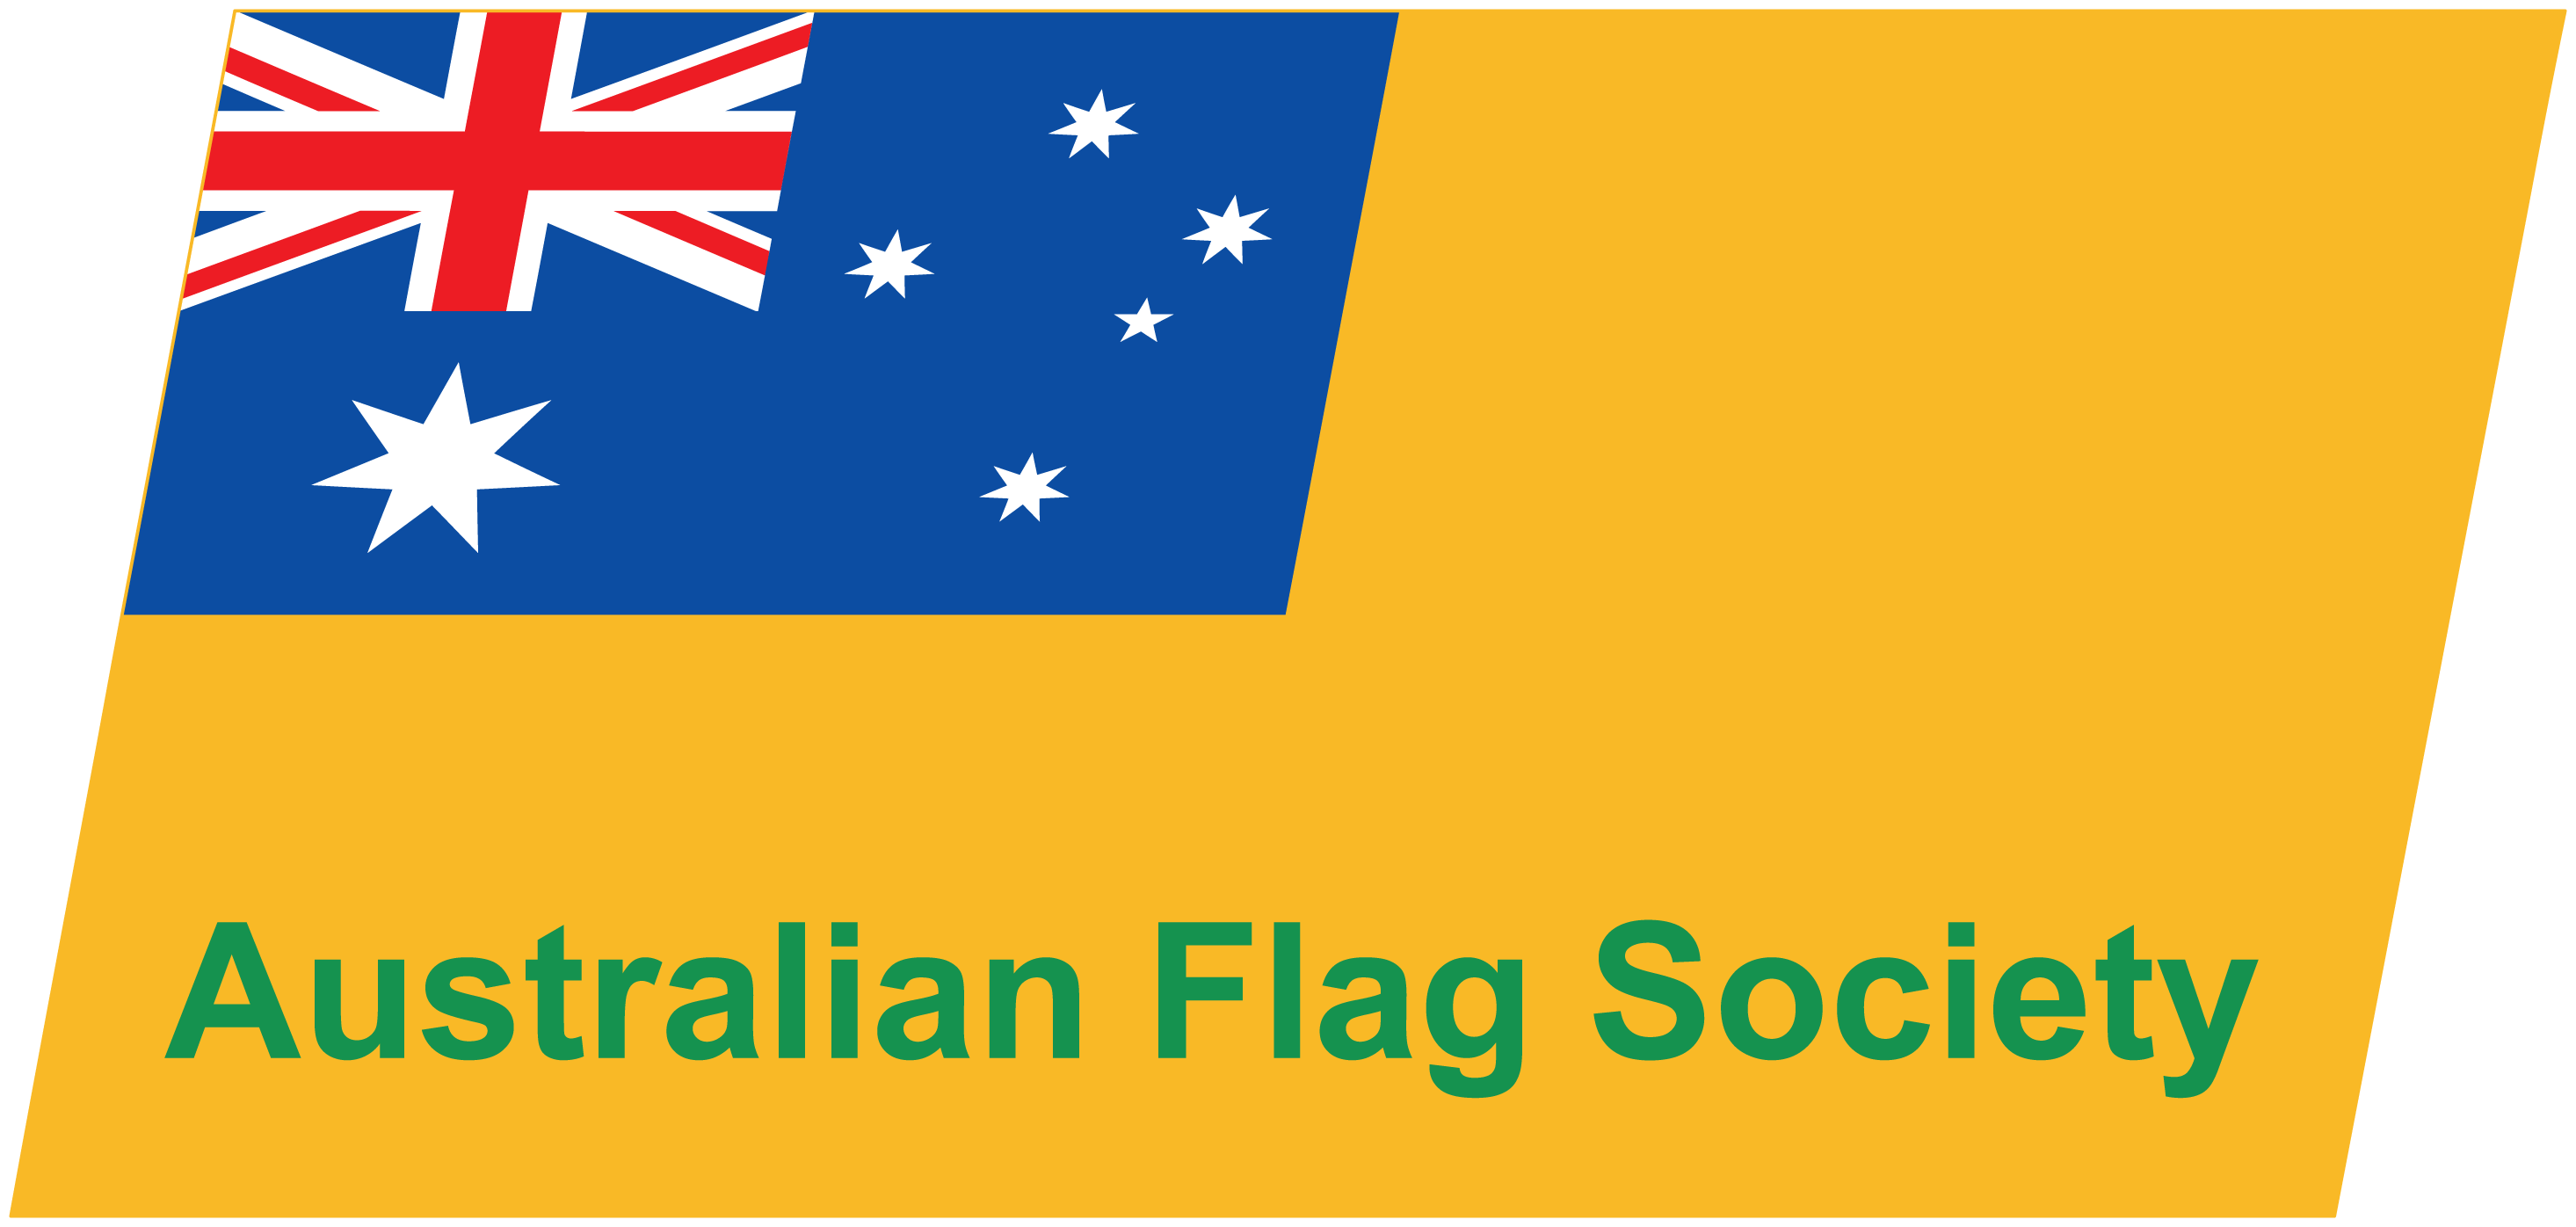 Australian Flag Society Wikipedia